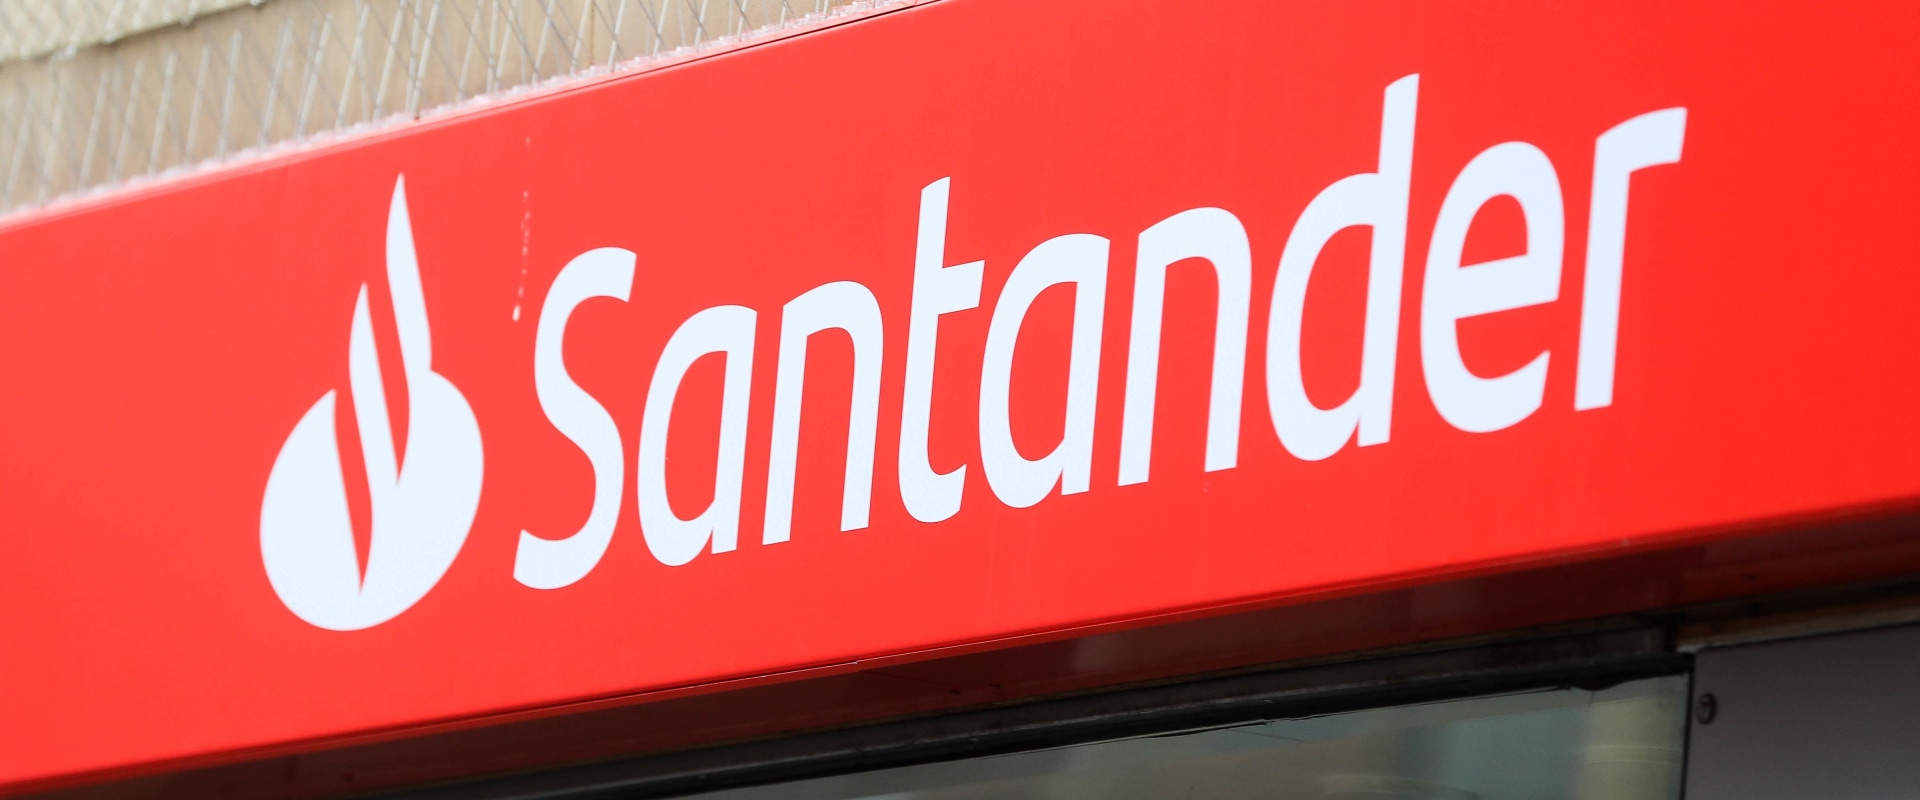 Questions to Ask a Santander Mortgage Advisor